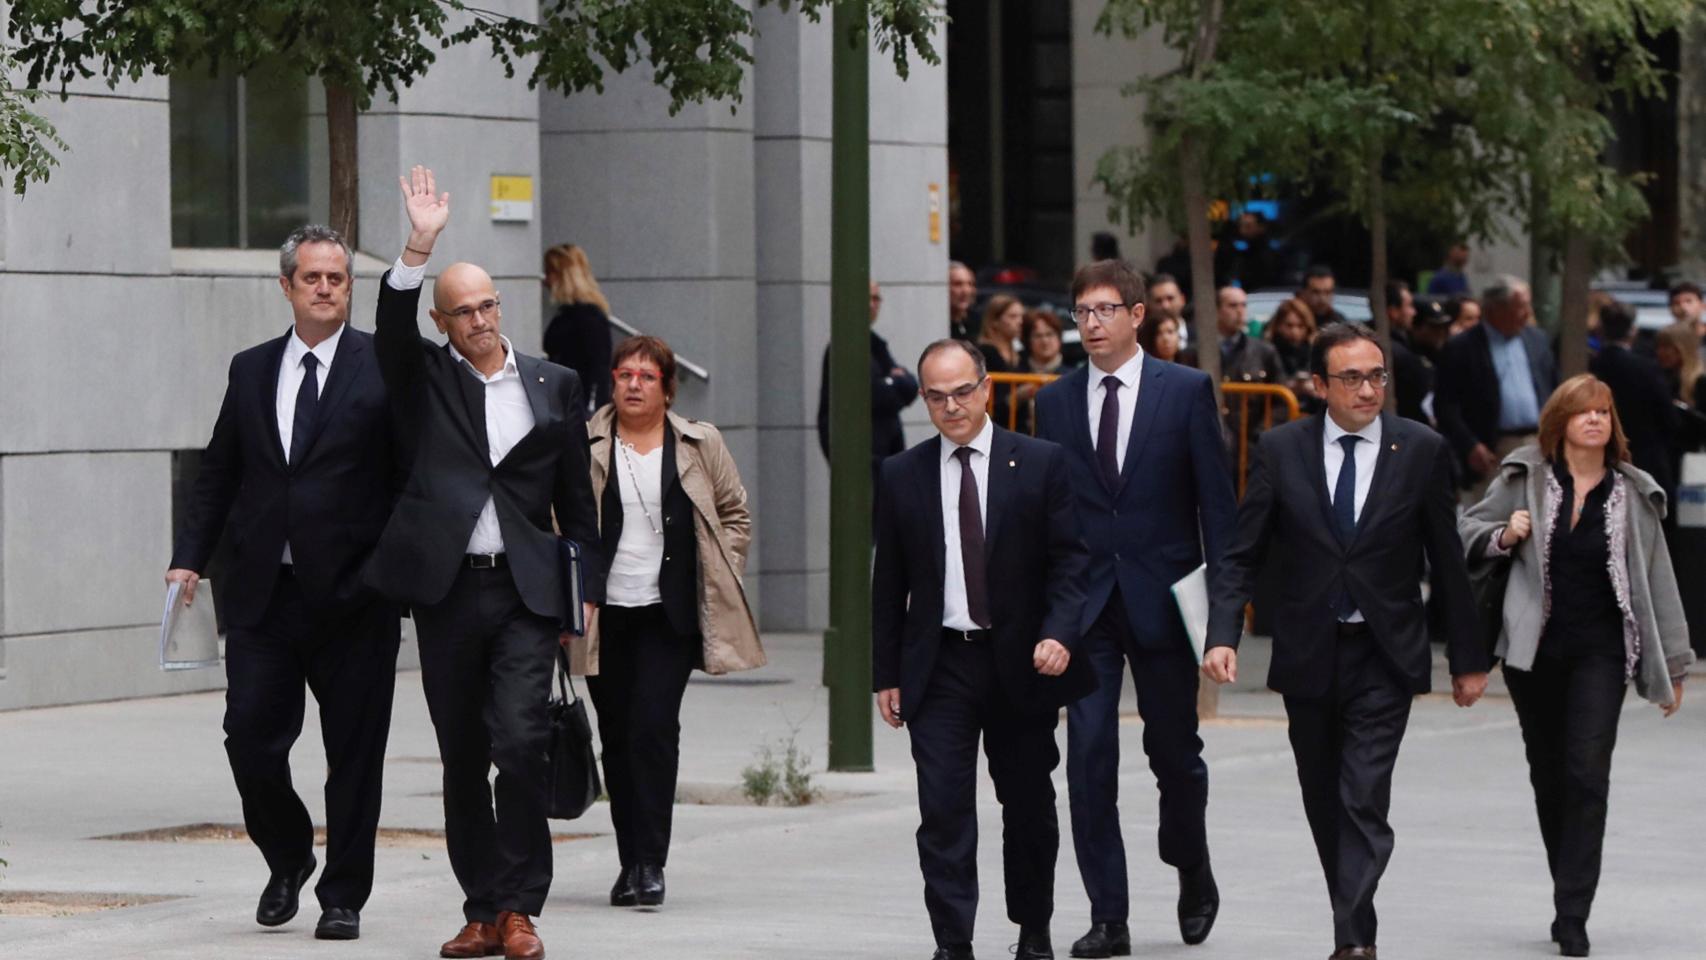 Los exconsellers Jordi Turull, Joaquim Forn, Josep Rull,  Carles Mundó y Dolors Bassa han llegado juntos a la sede de la Audiencia Nacional. También Raül Romeva.